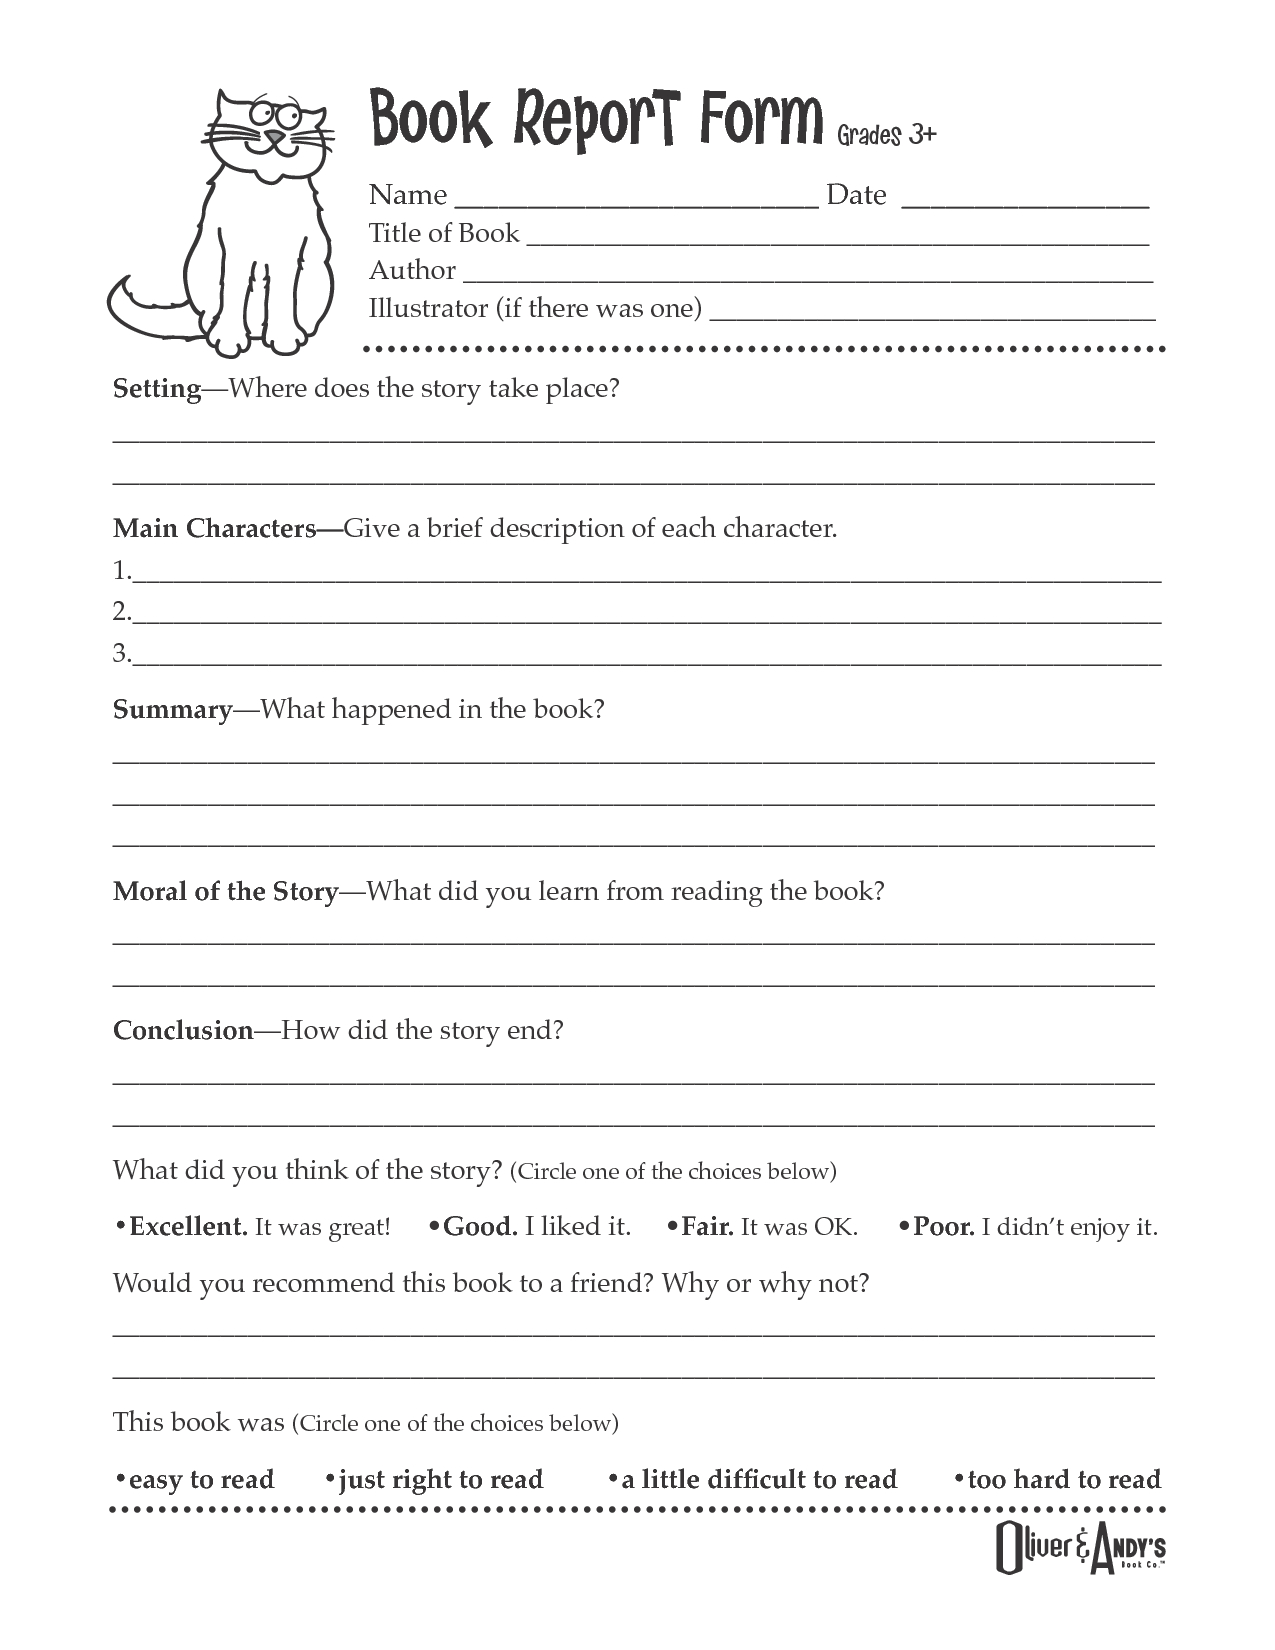 Second Grade Book Report Template | Book Report Form Grades Within Biography Book Report Template